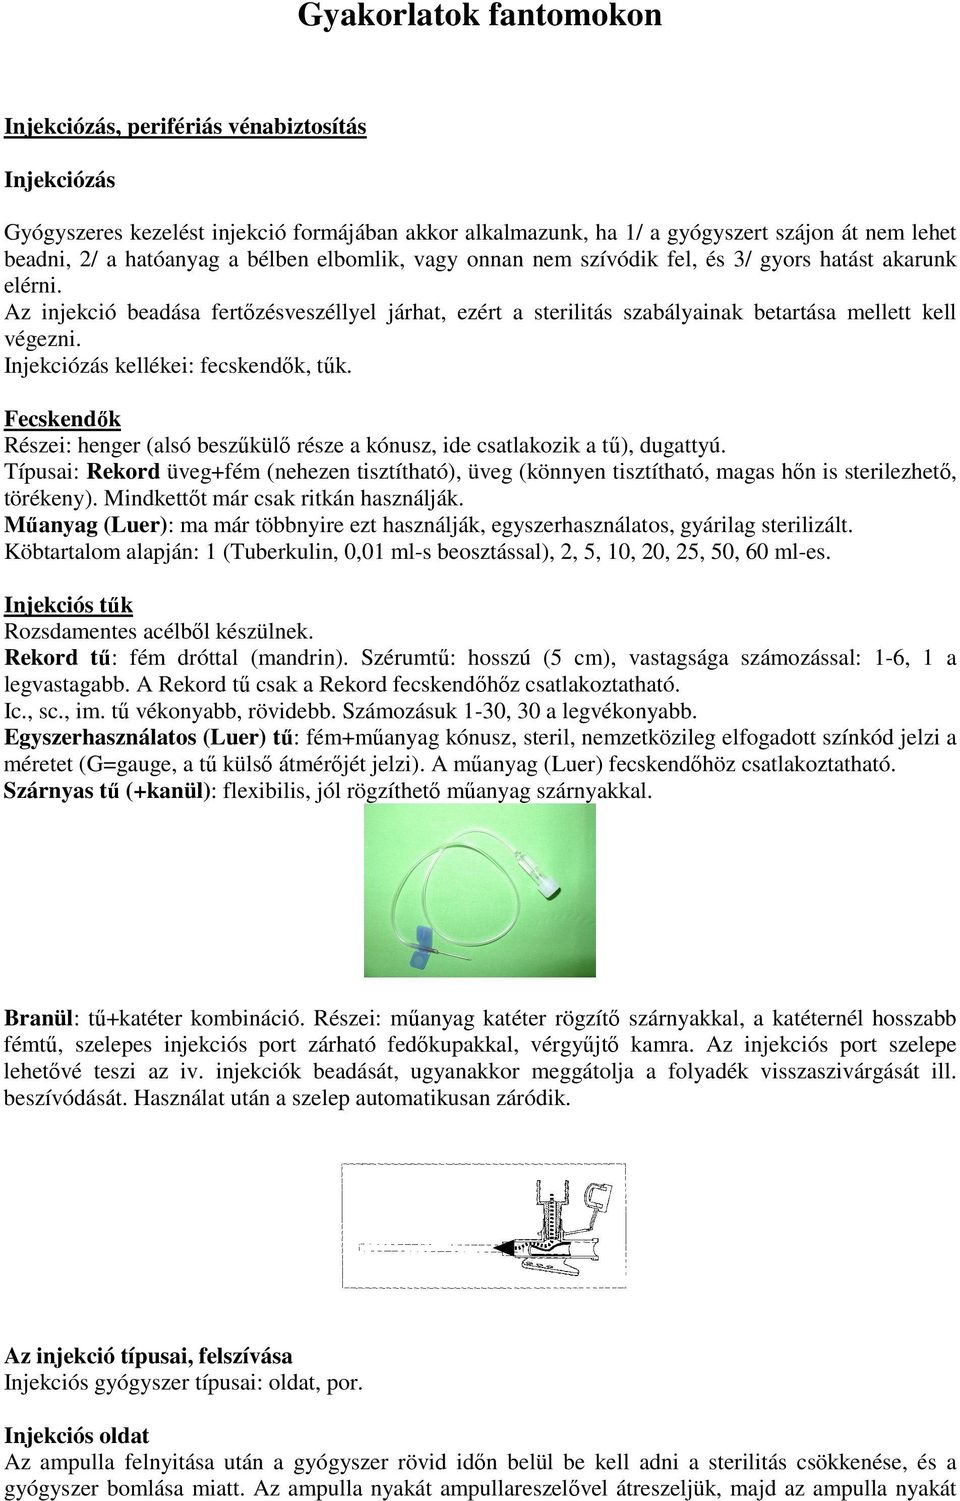 Gyakorlatok fantomokon - PDF Free Download